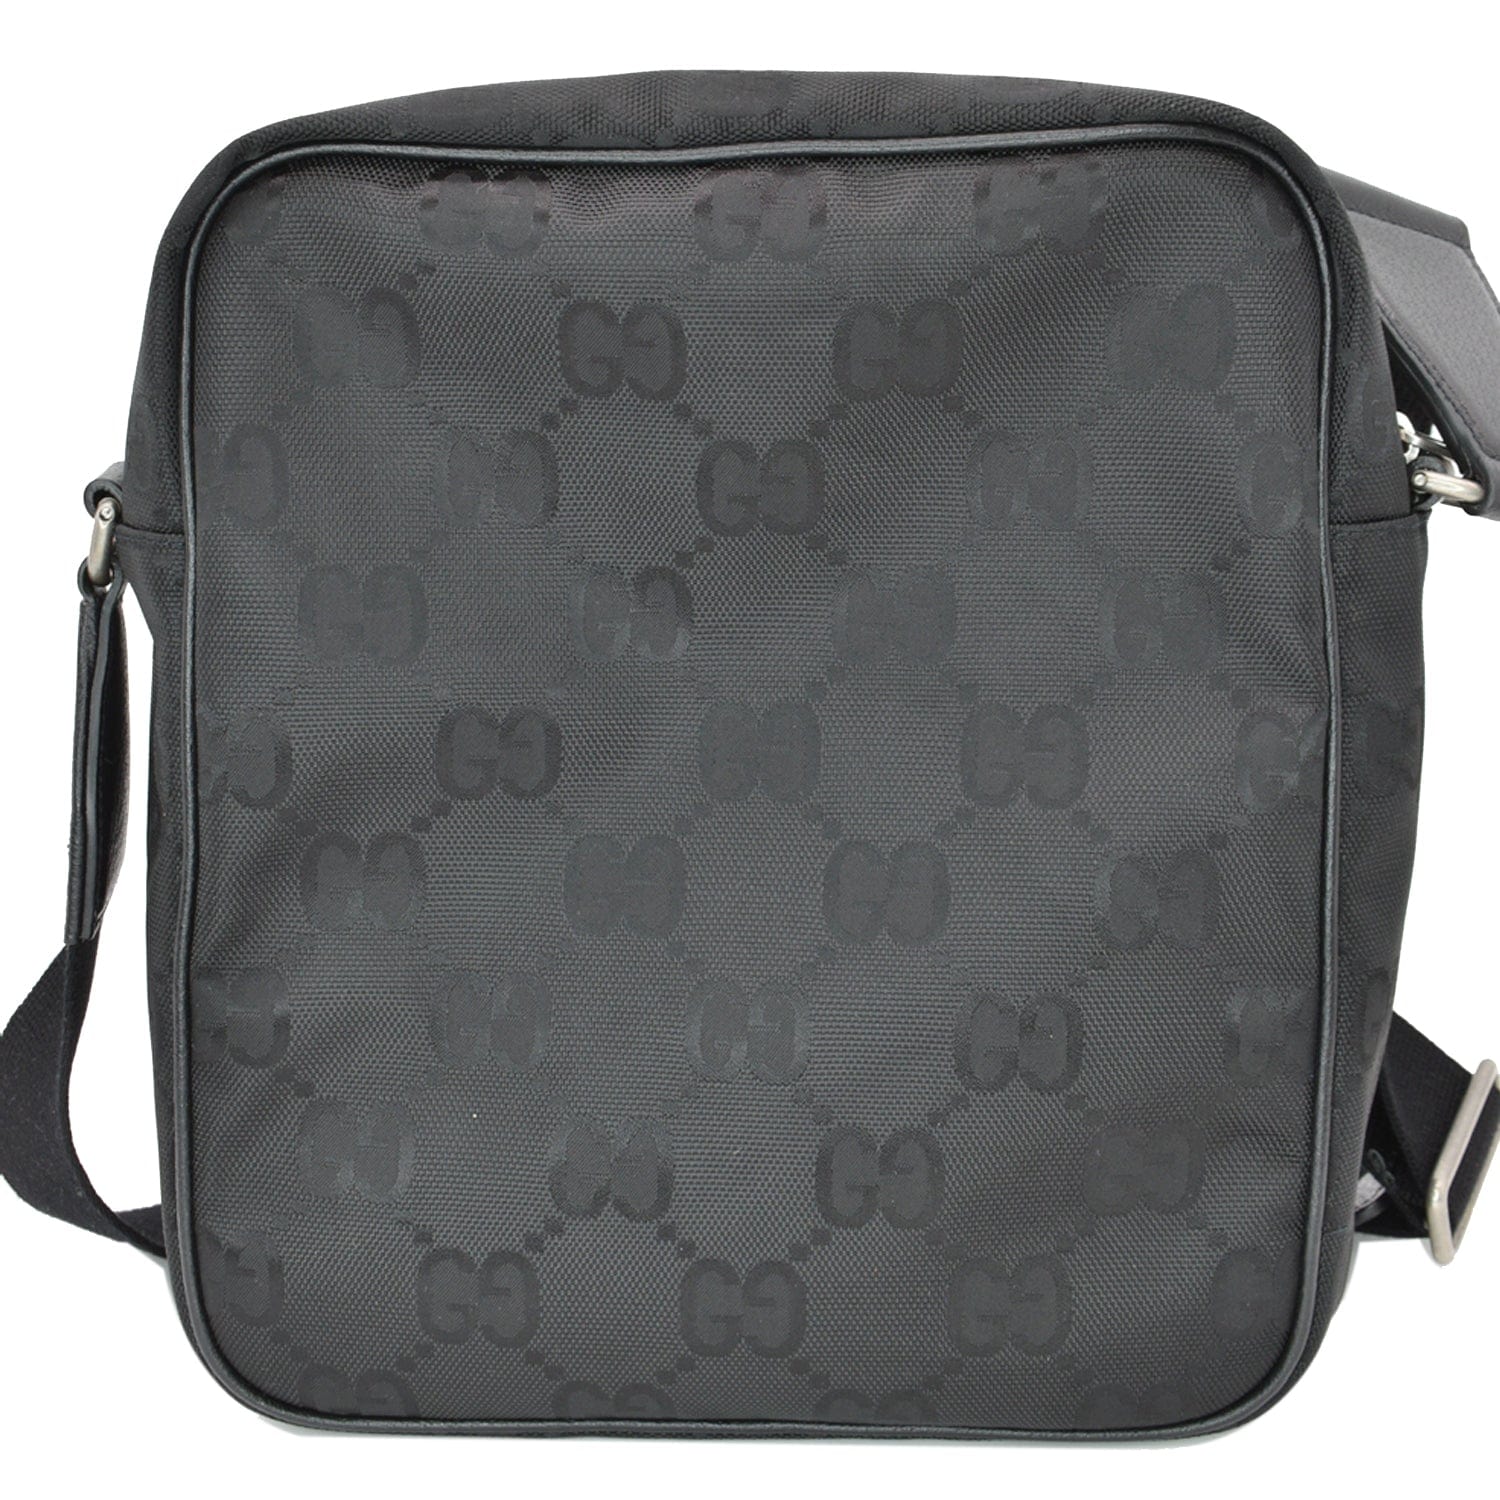 Vintage Gucci Black Nylon Leather Trim Shoulder Bag Purse 